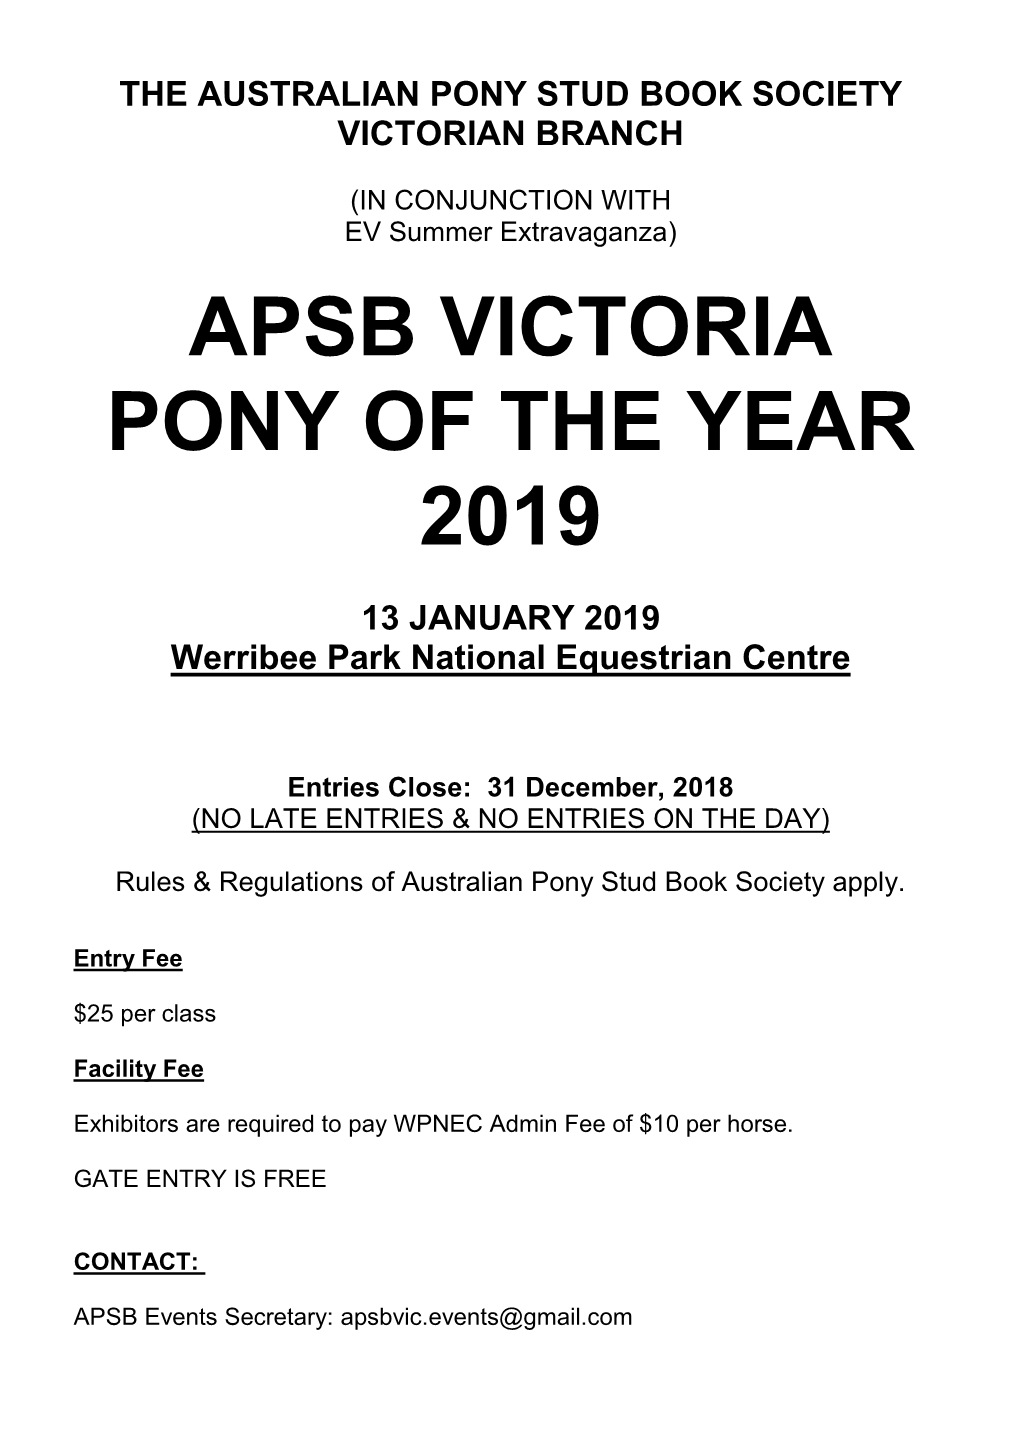 The Australian Pony Stud Book Society Victorian Branch